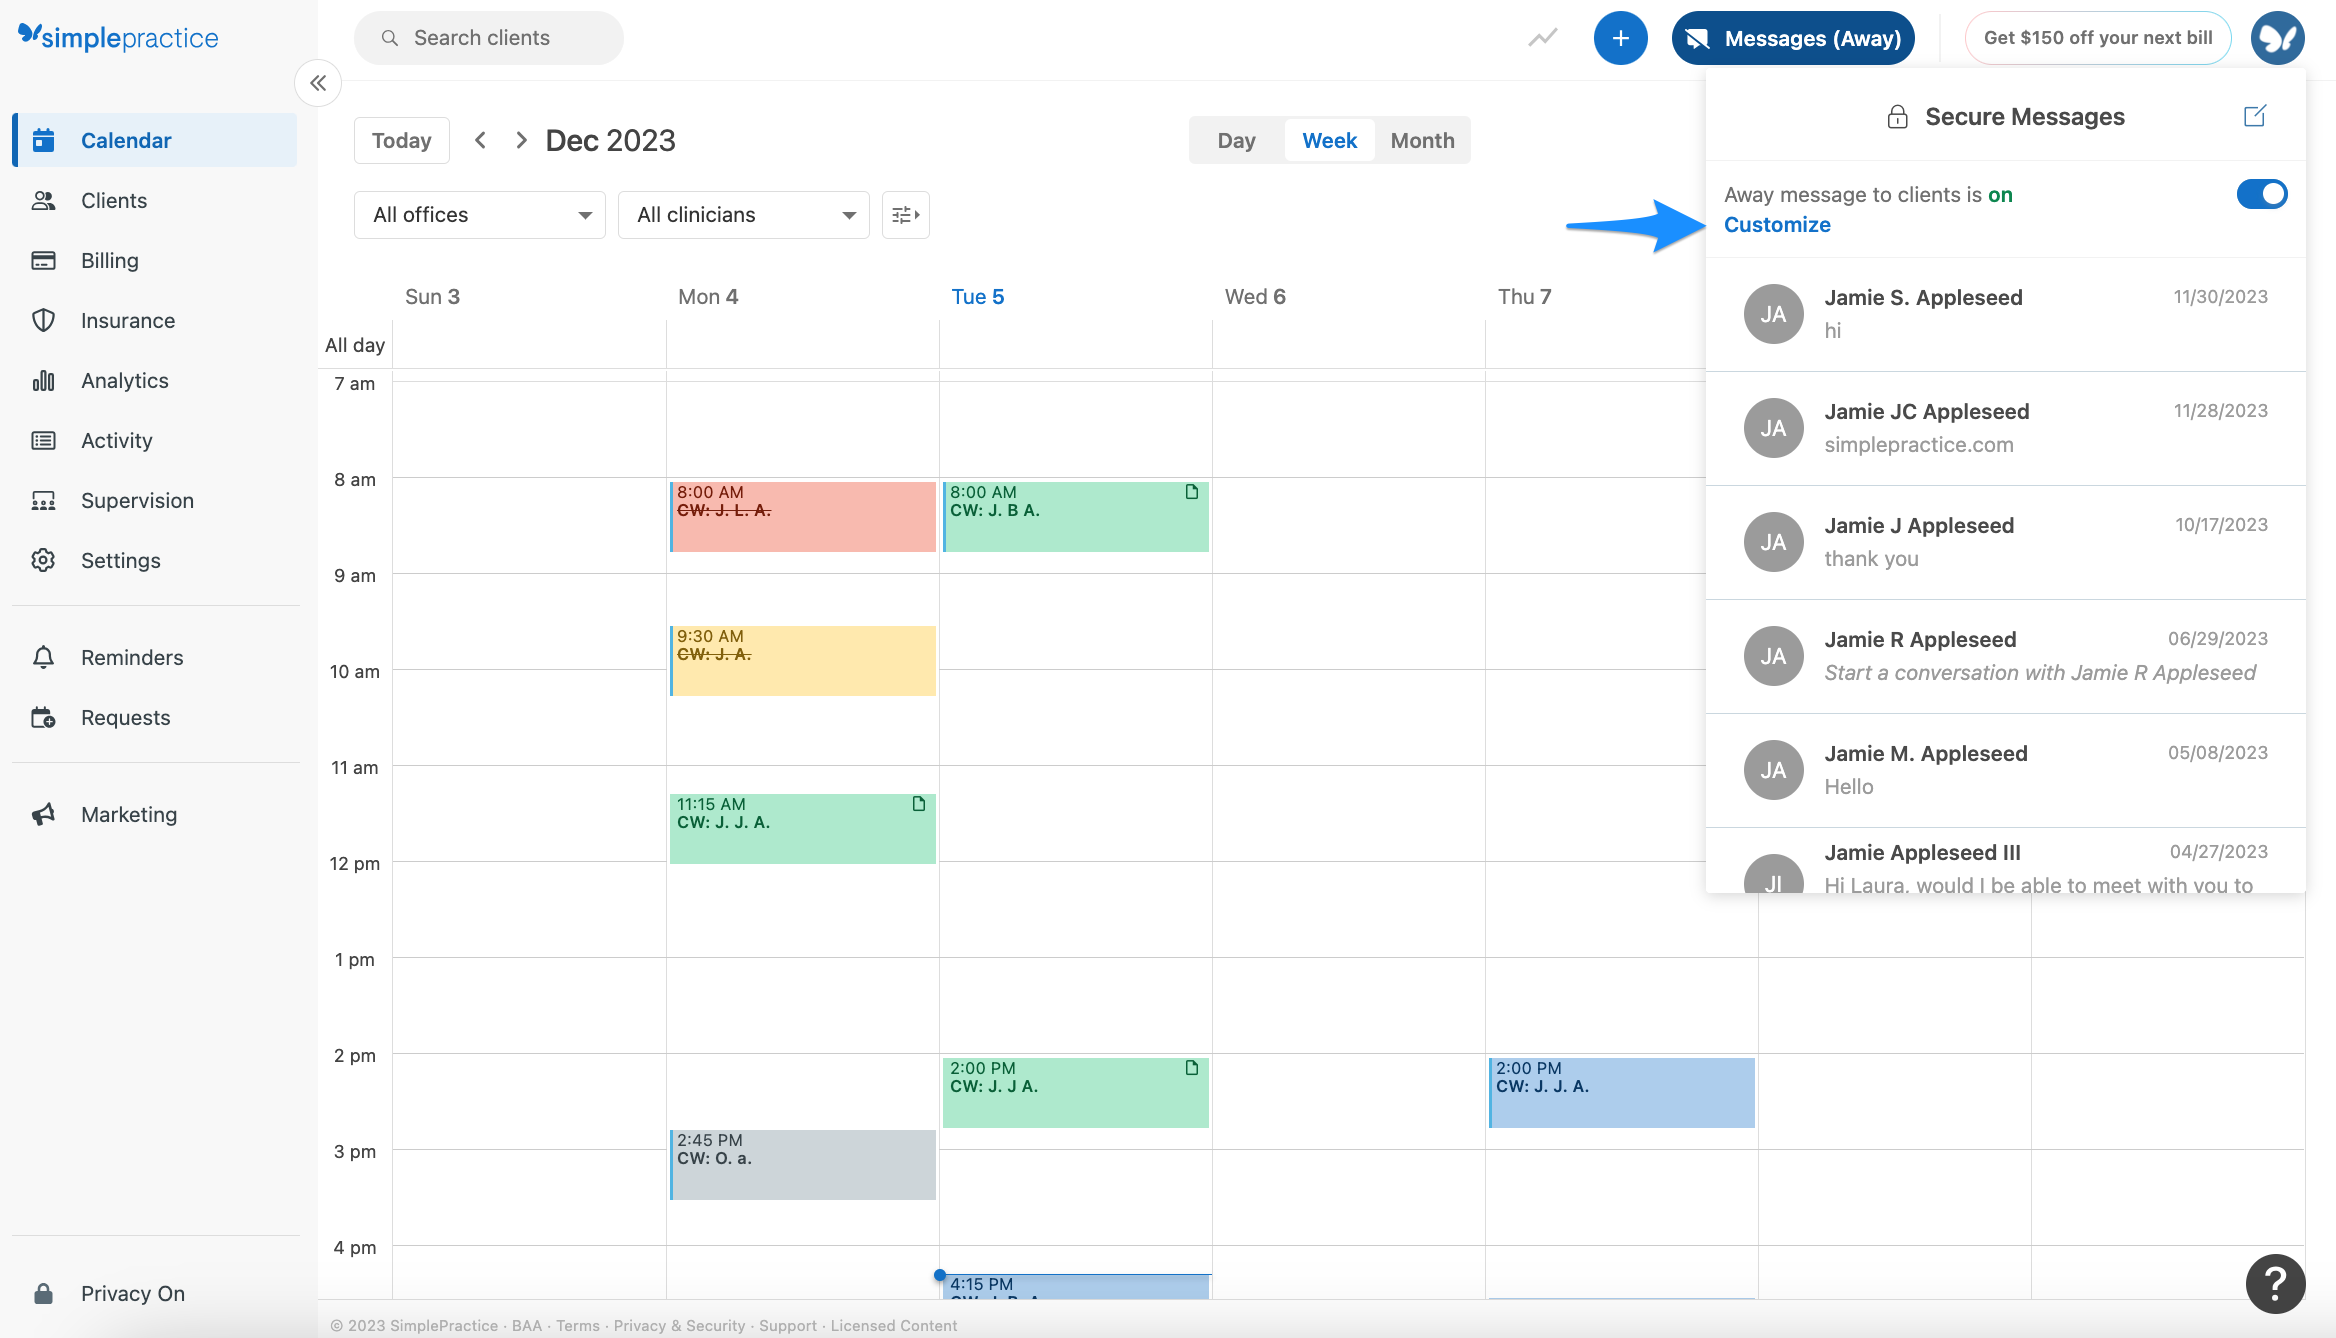 customizeawaymessage.simplepractice.calendar.png